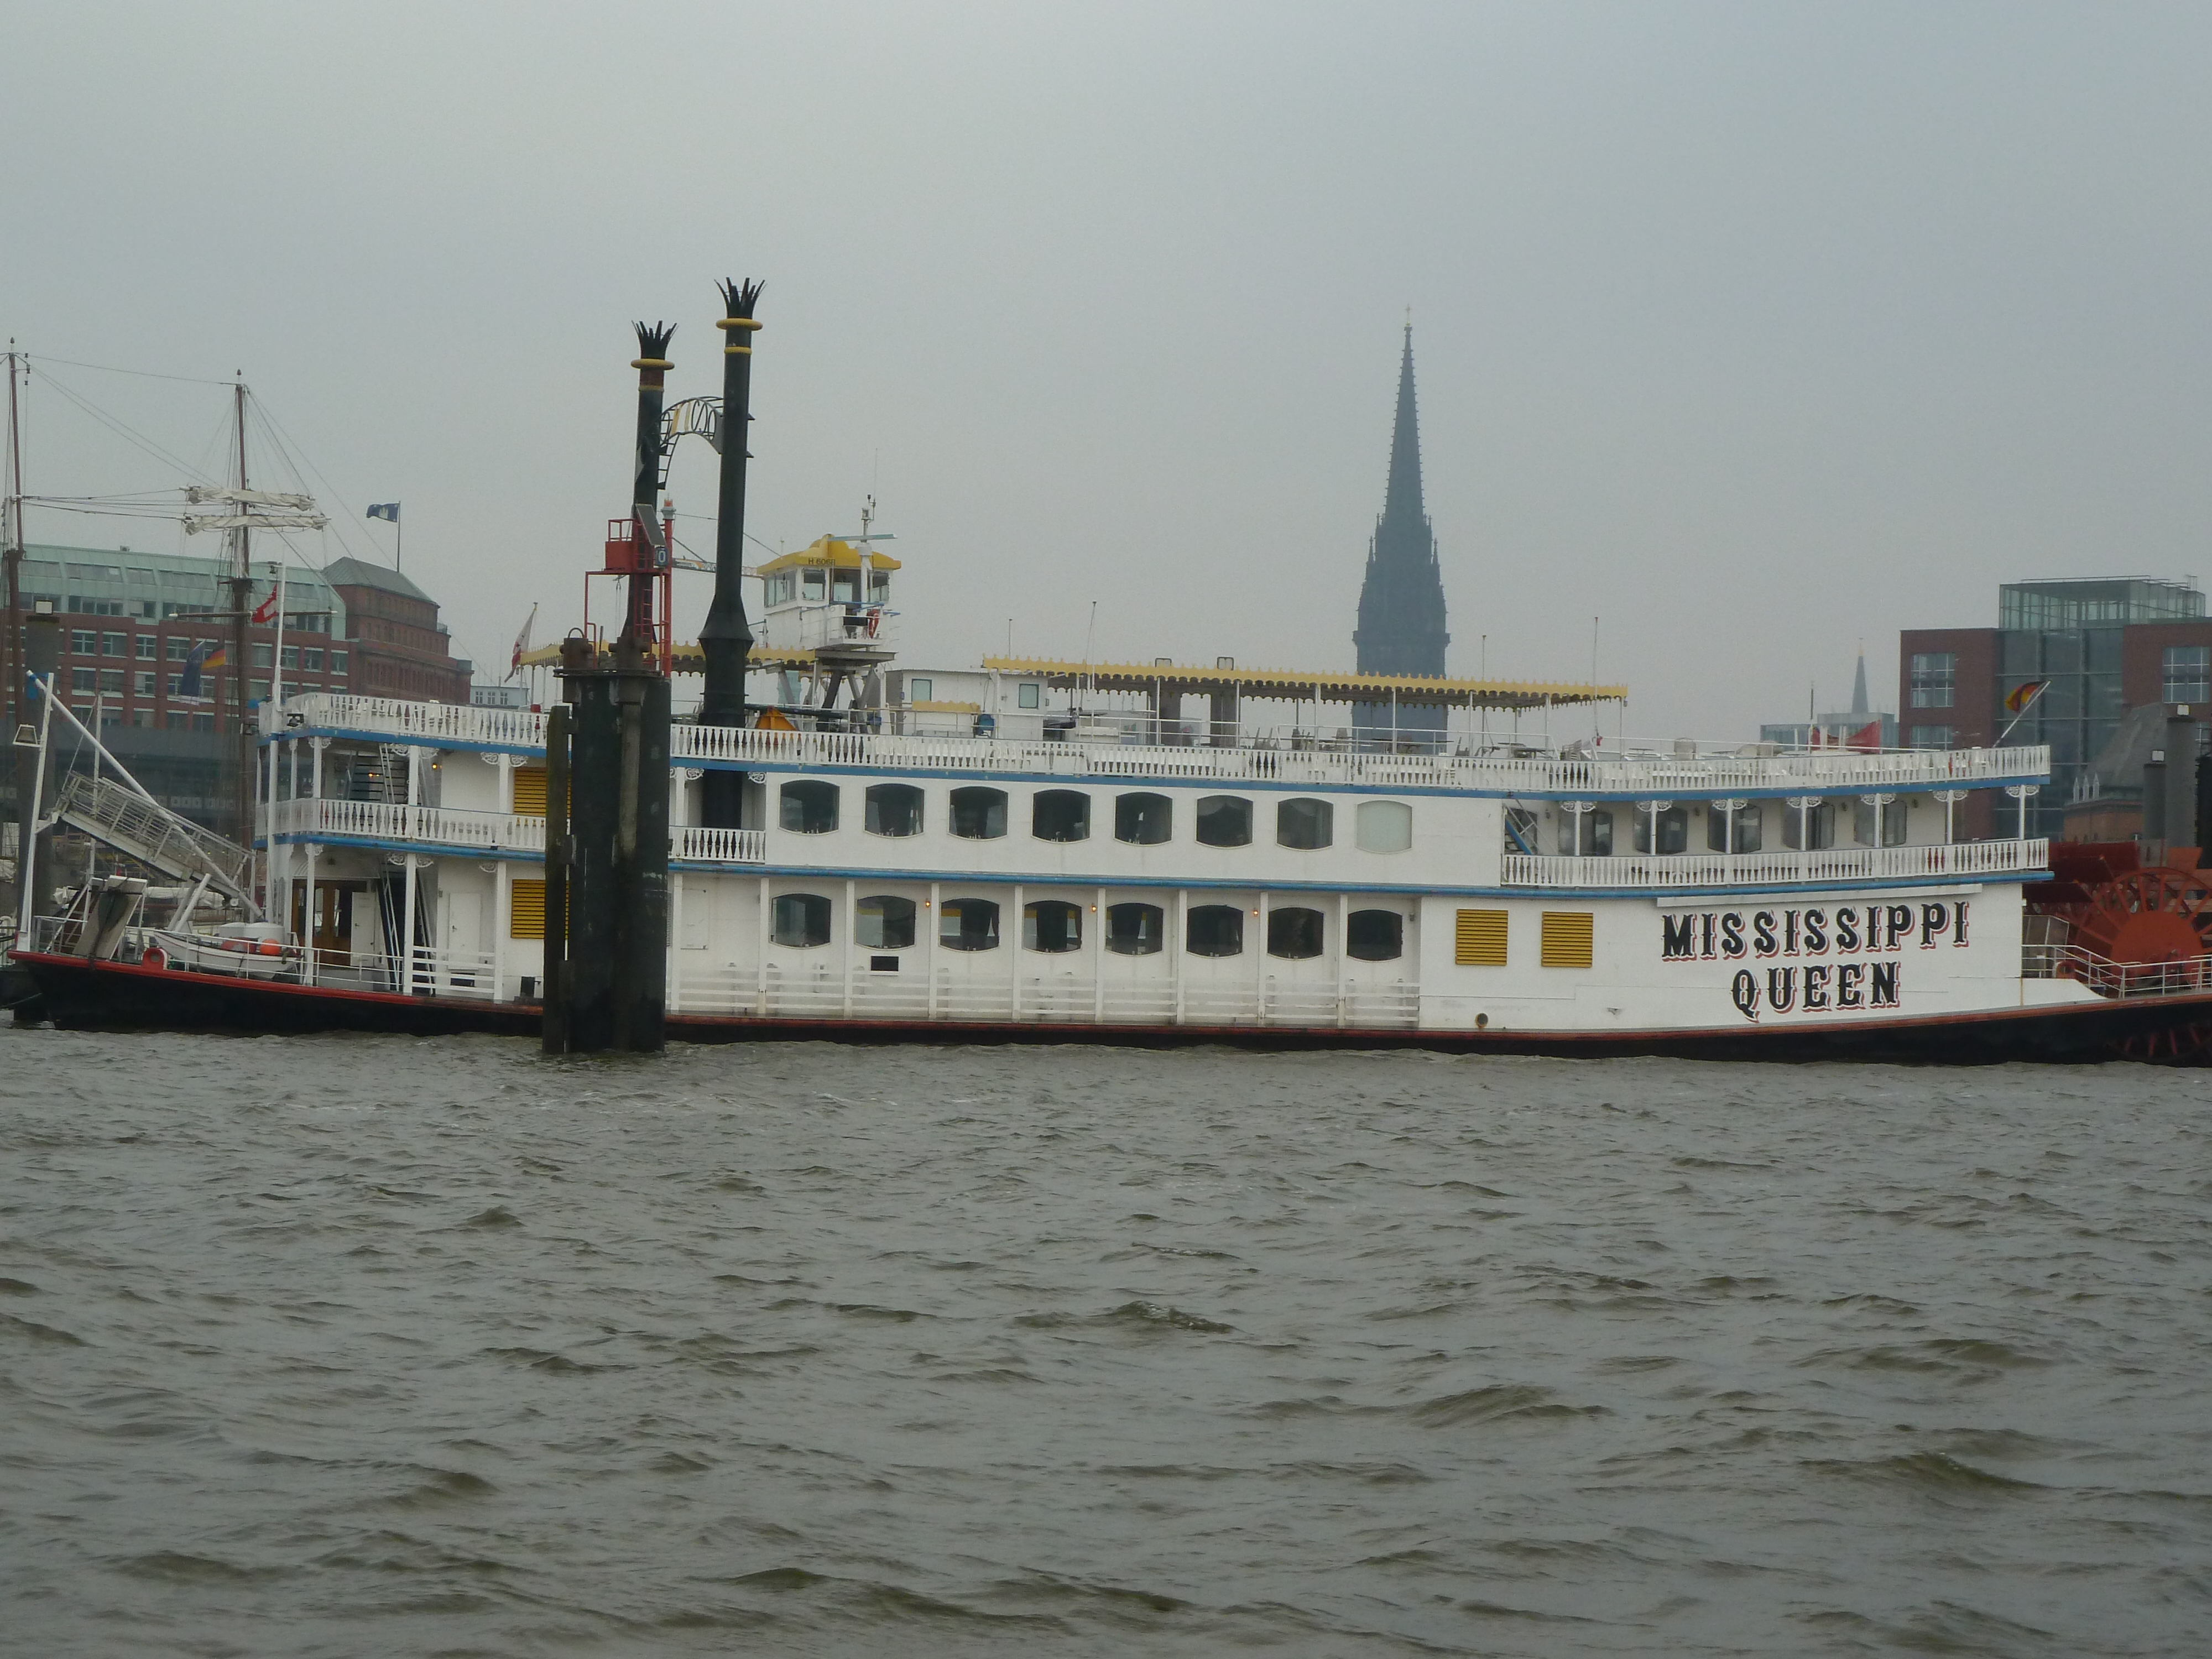 http://bashfuladventurer.com/wp-content/uploads/2014/07/Mississippi-Queen-in-Hamburg.jpg